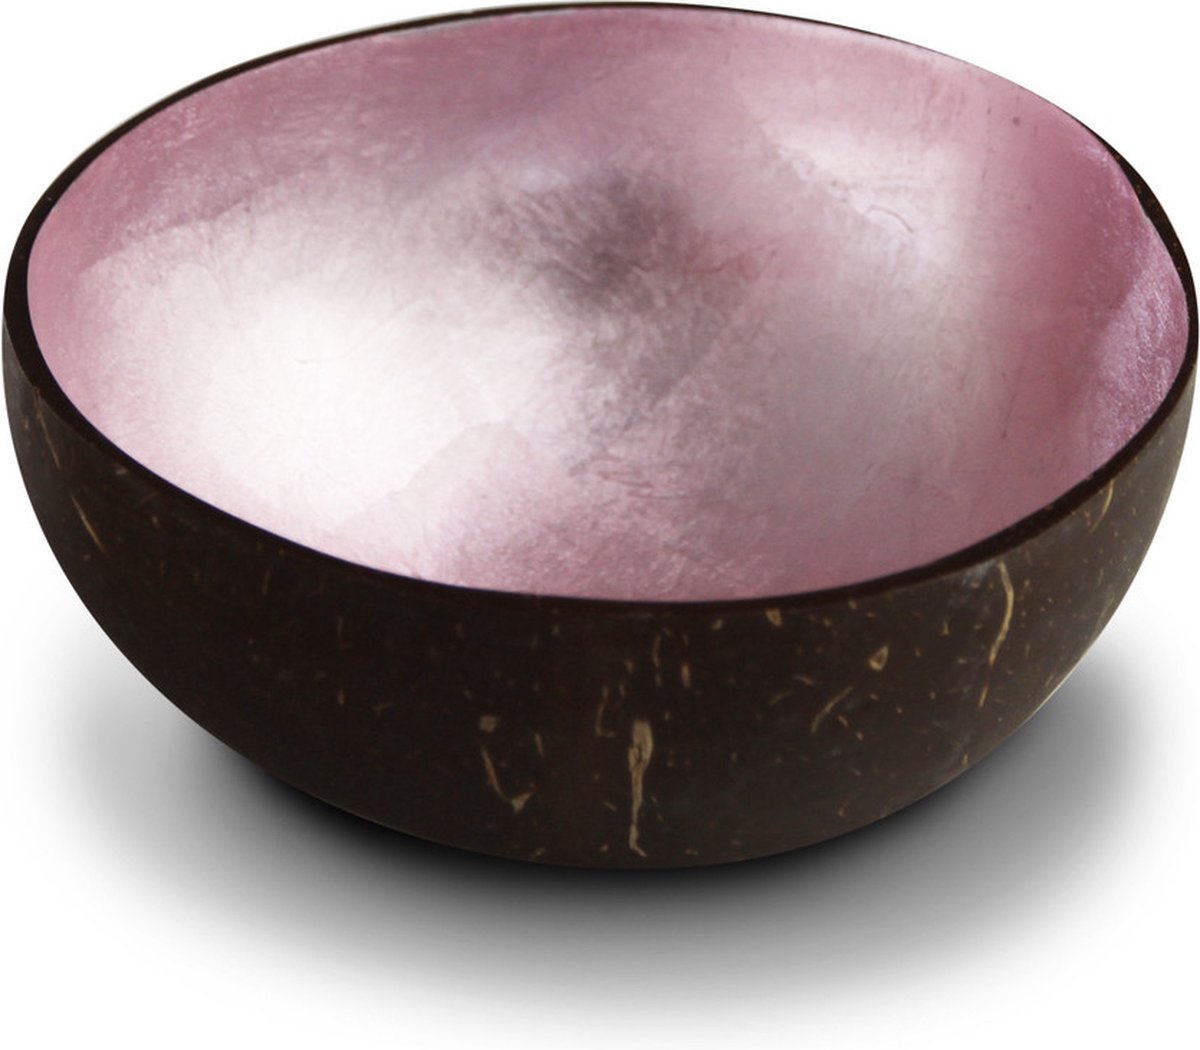 Noya - Coconut Bowl - Kokosnoot - Schaal Kom - Zacht Roze Metallic Leaf